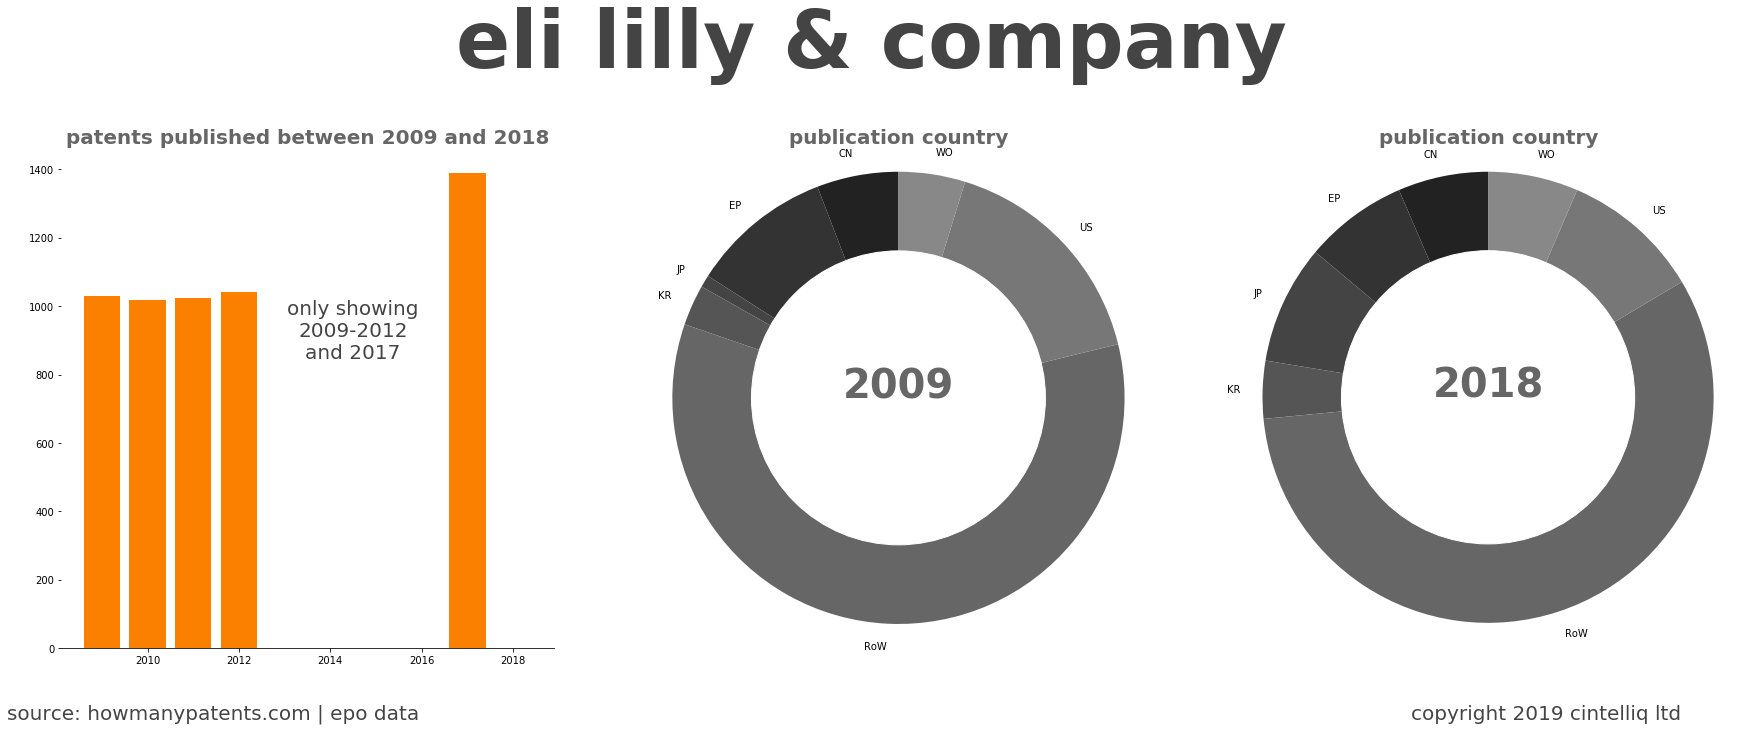 summary of patents for Eli Lilly & Company